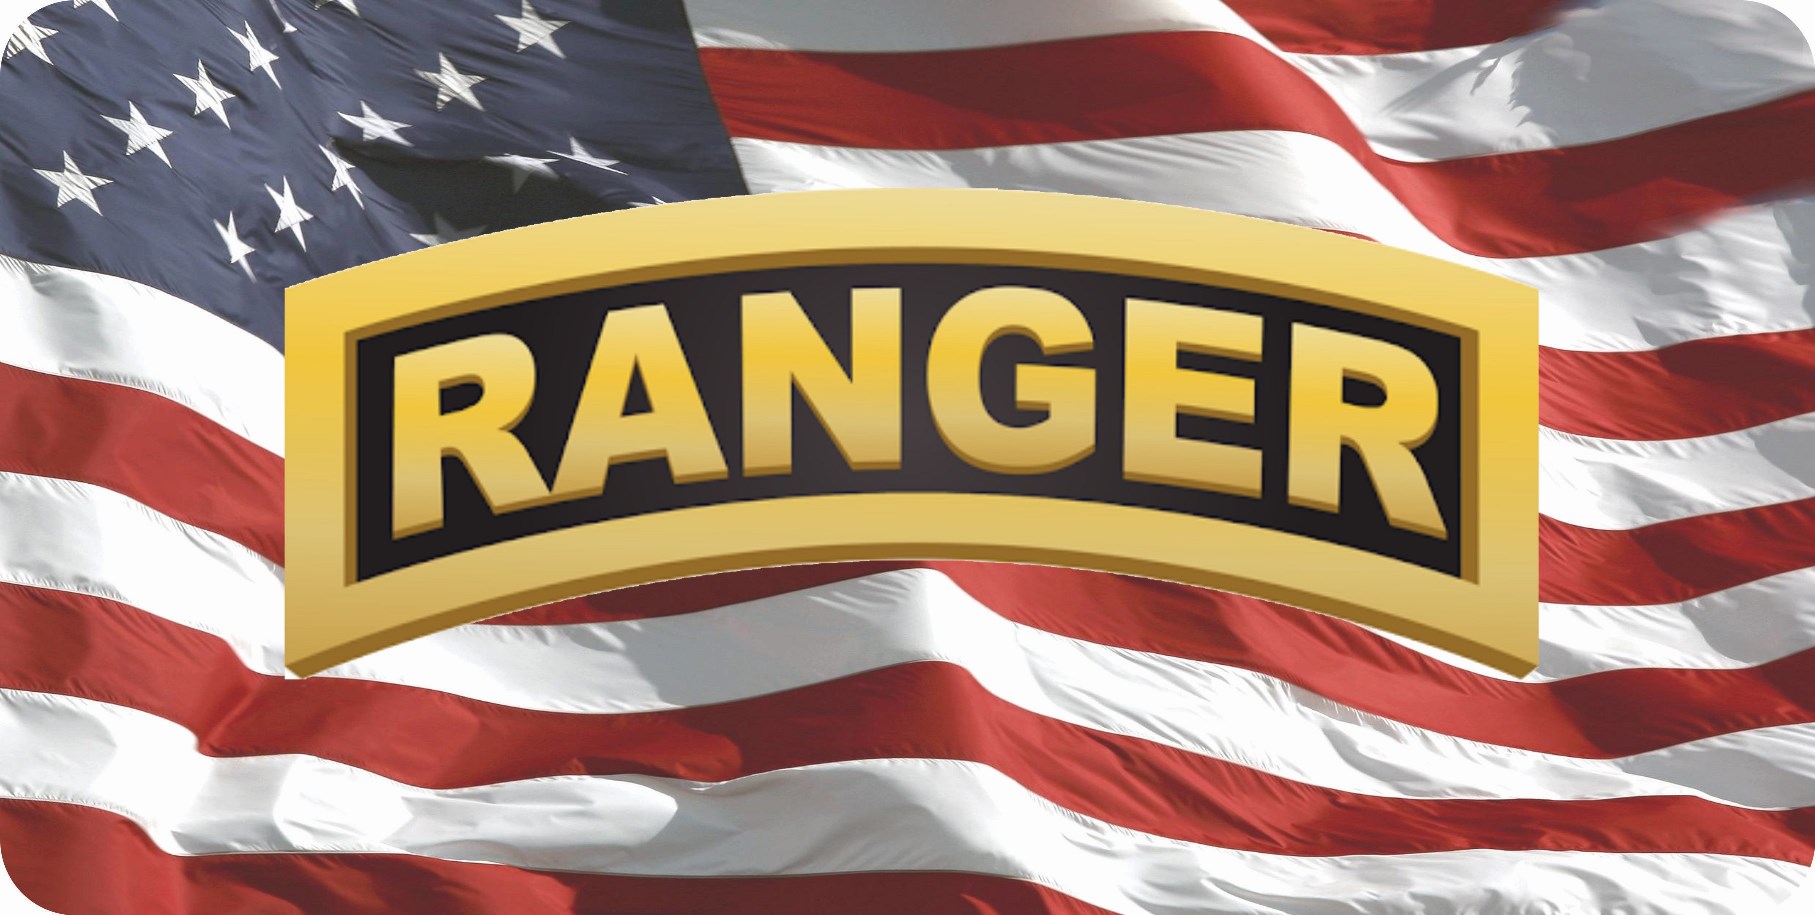 Army Ranger On Wavy U.S. FLAG Photo License Plate